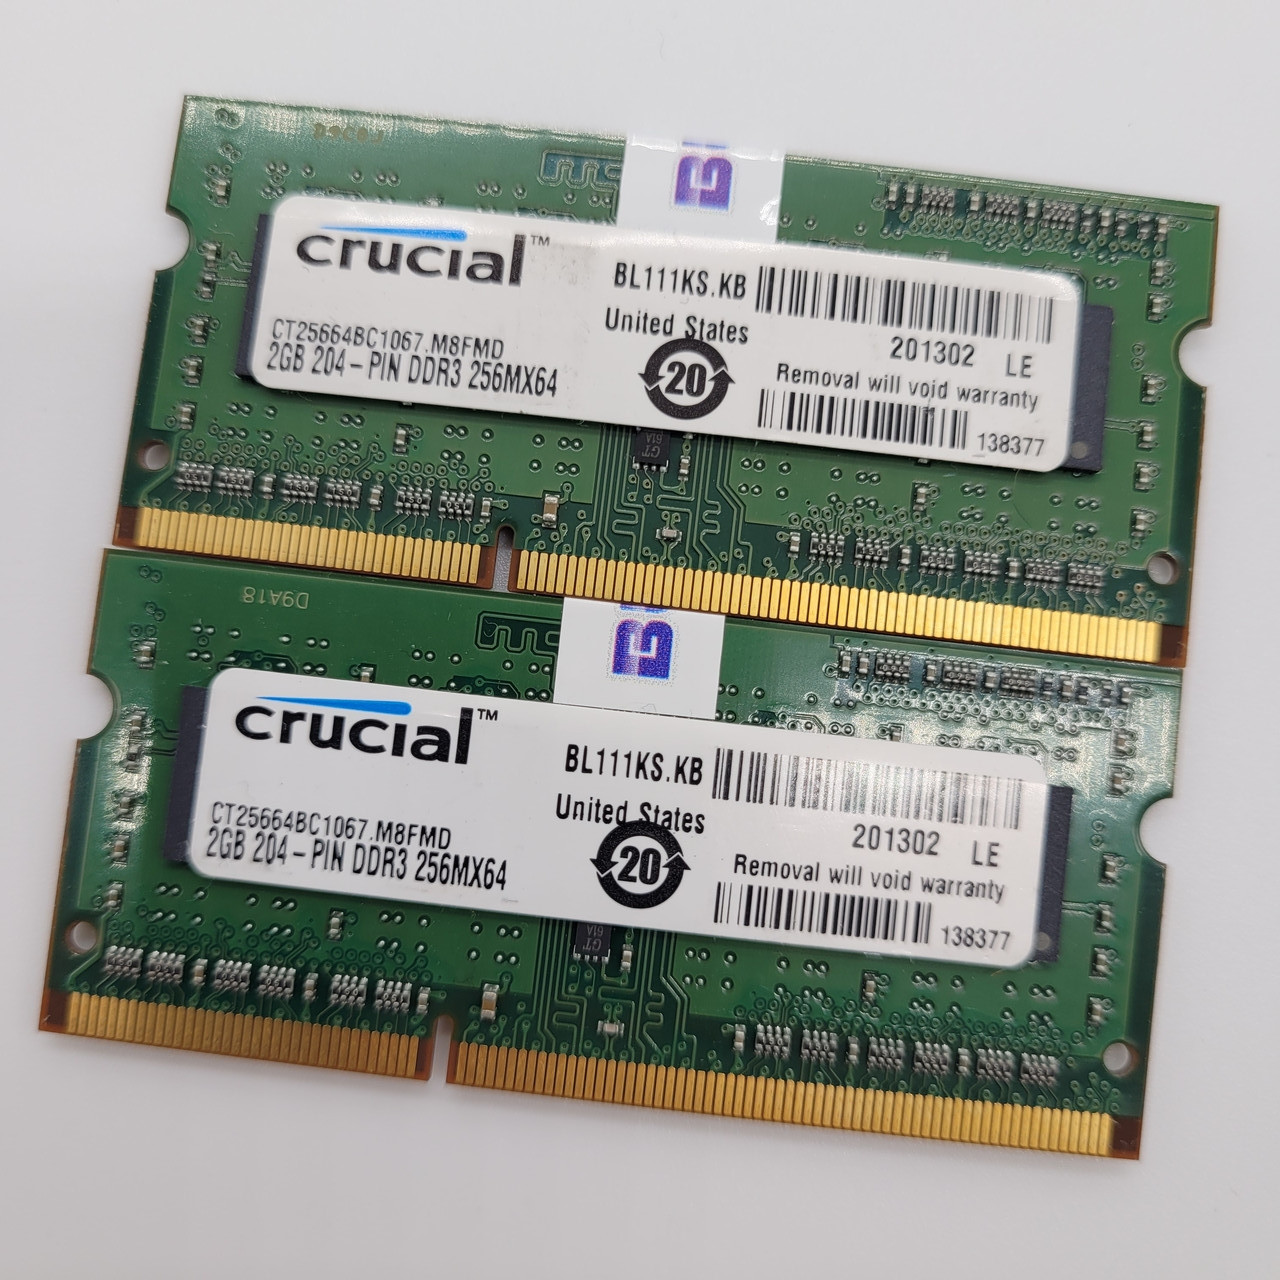 Пара оперативної пам'яті для ноутбука Crucial DDR3 4Gb (2g+2Gb) 1066MHz 8500s 1R8 CL7 (CT25664BC1067.M8FMD) Б/В